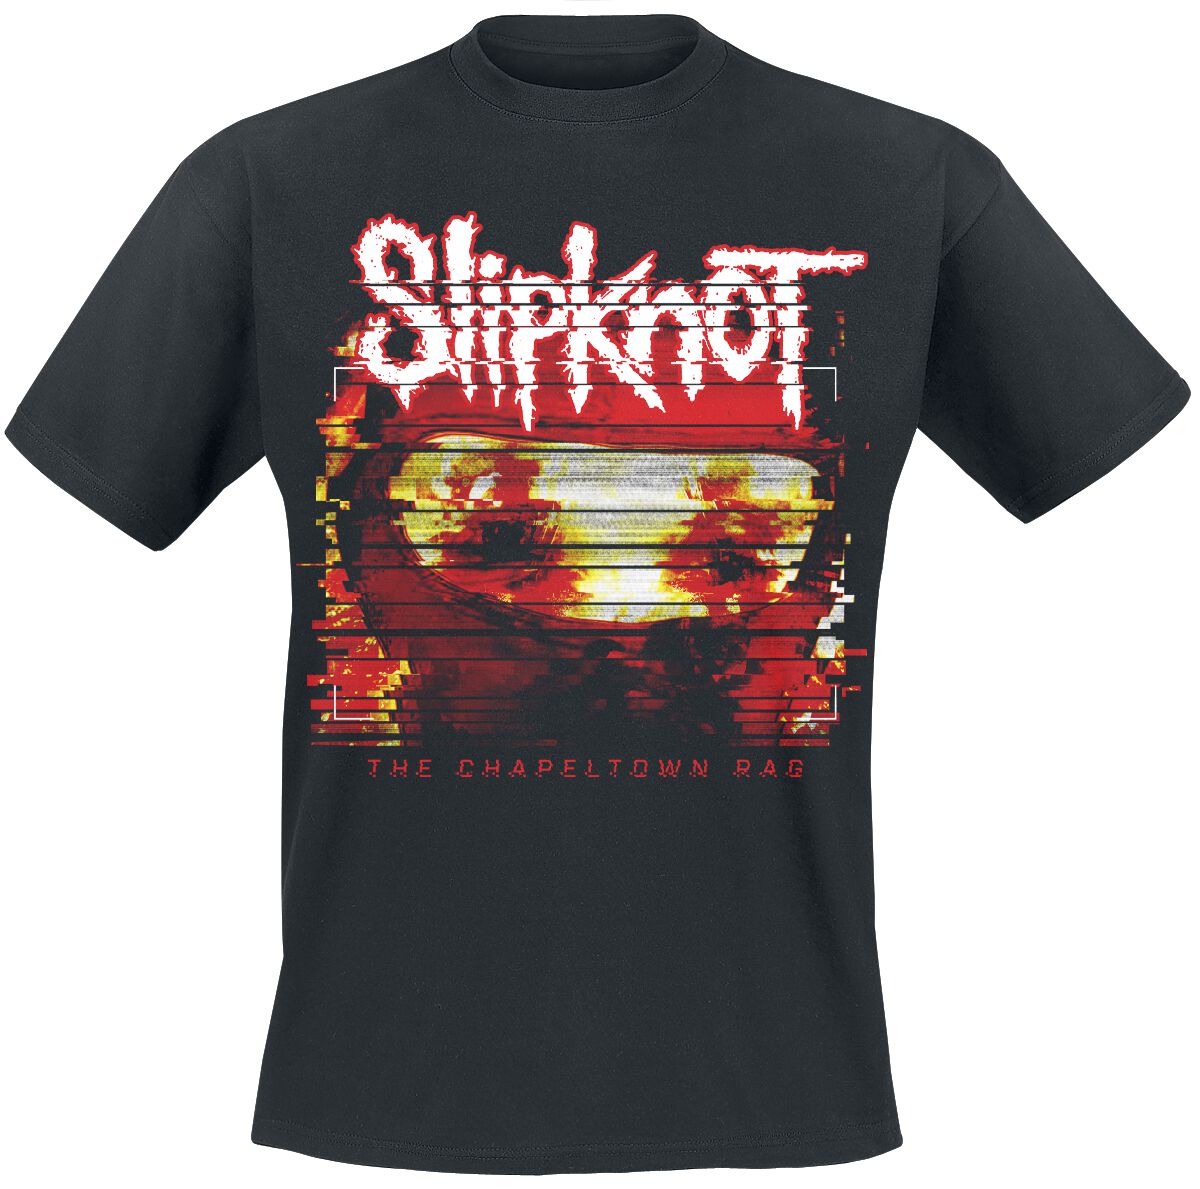 Slipknot The Chapeltown Rag Glitch T-Shirt black